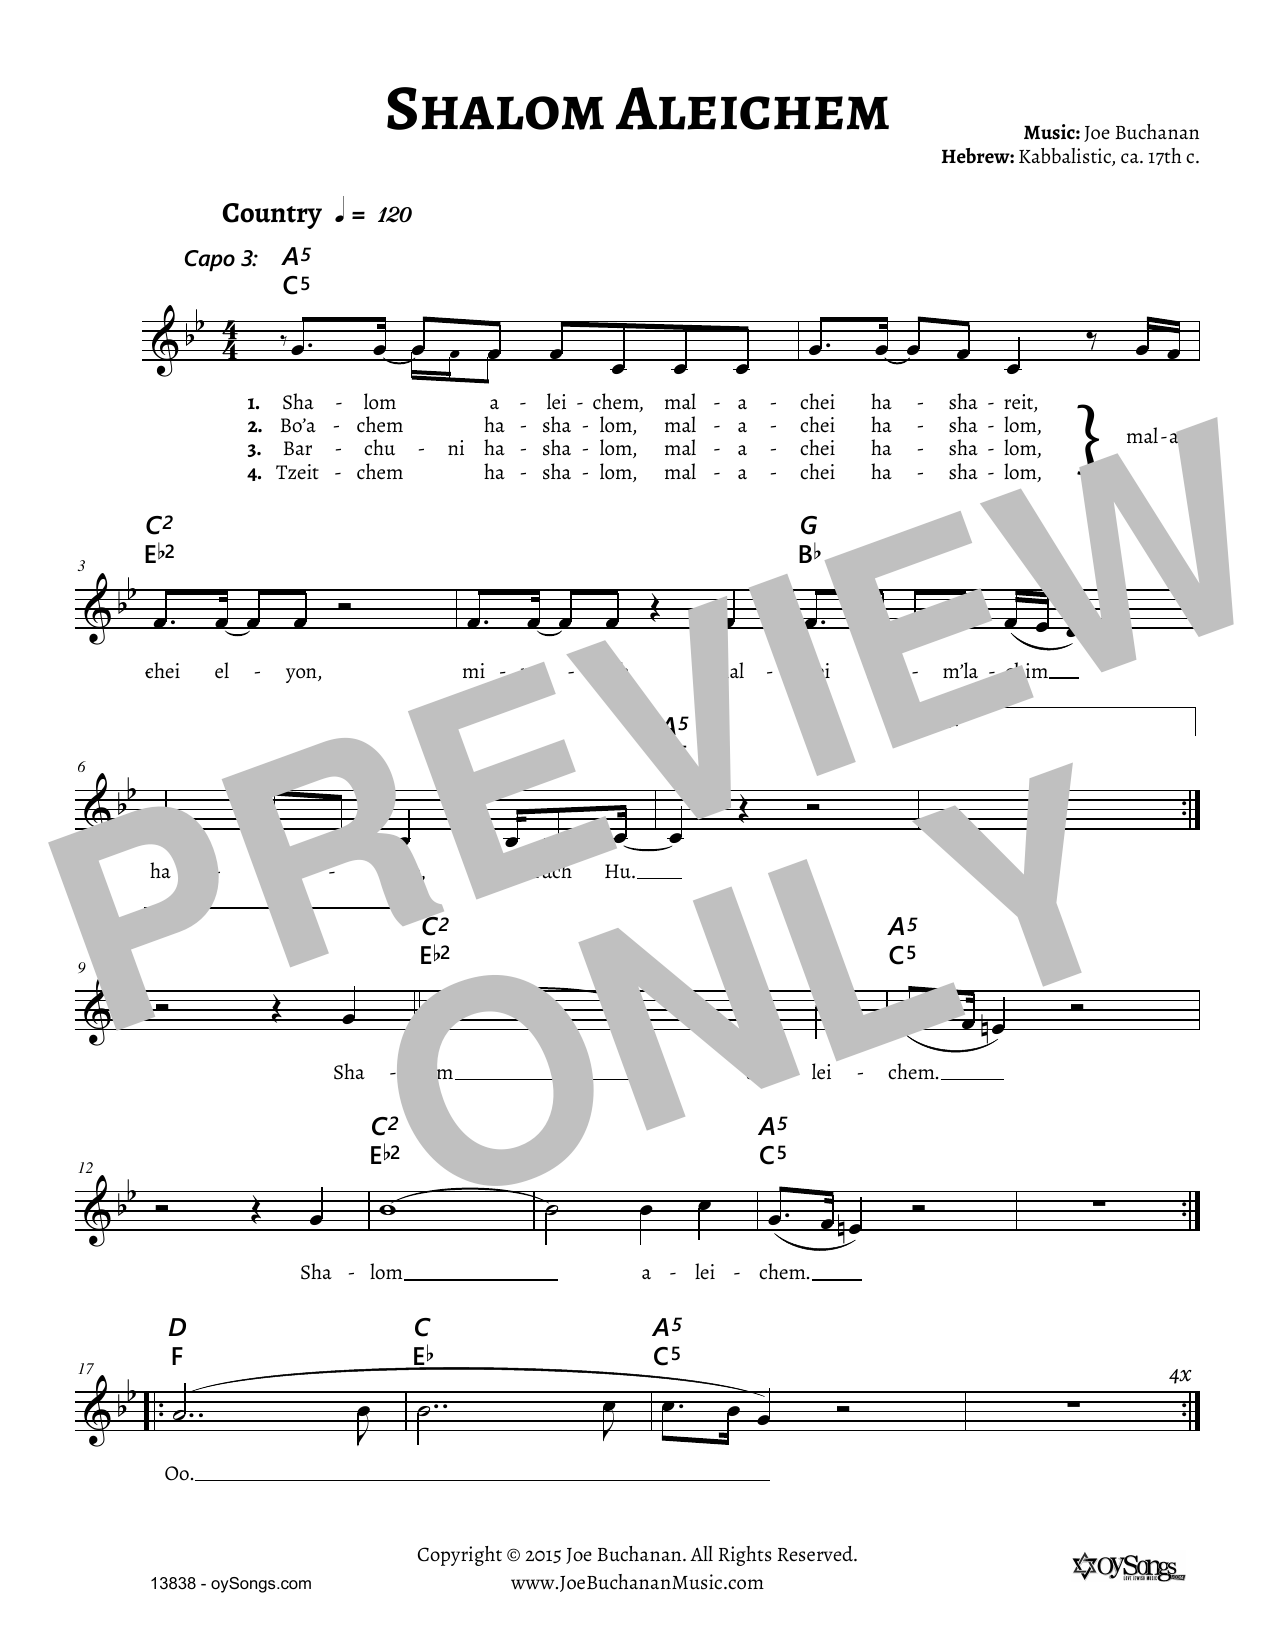 Joe Buchanan Shalom Aleichem Sheet Music Notes & Chords for Melody Line, Lyrics & Chords - Download or Print PDF